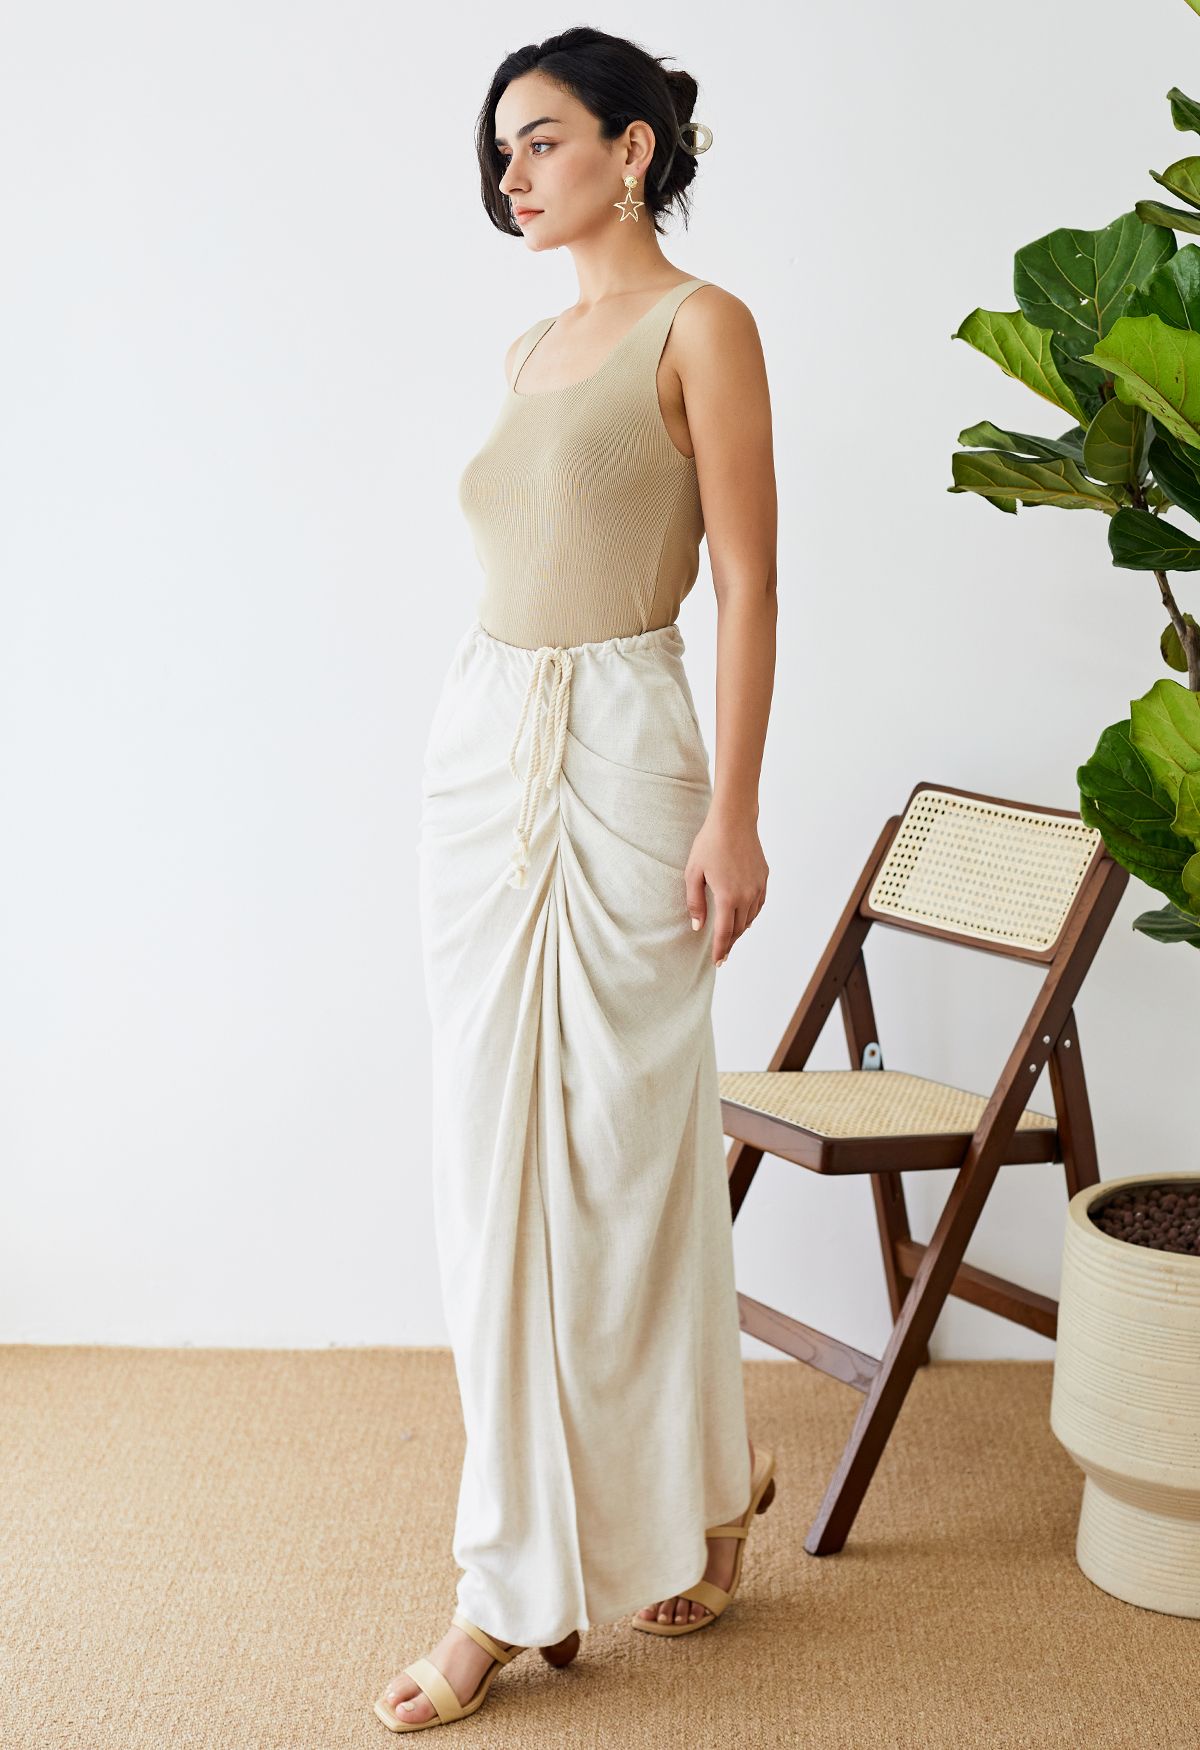 Breathable Linen Drape Maxi Skirt in Linen - Retro, Indie and Unique Fashion